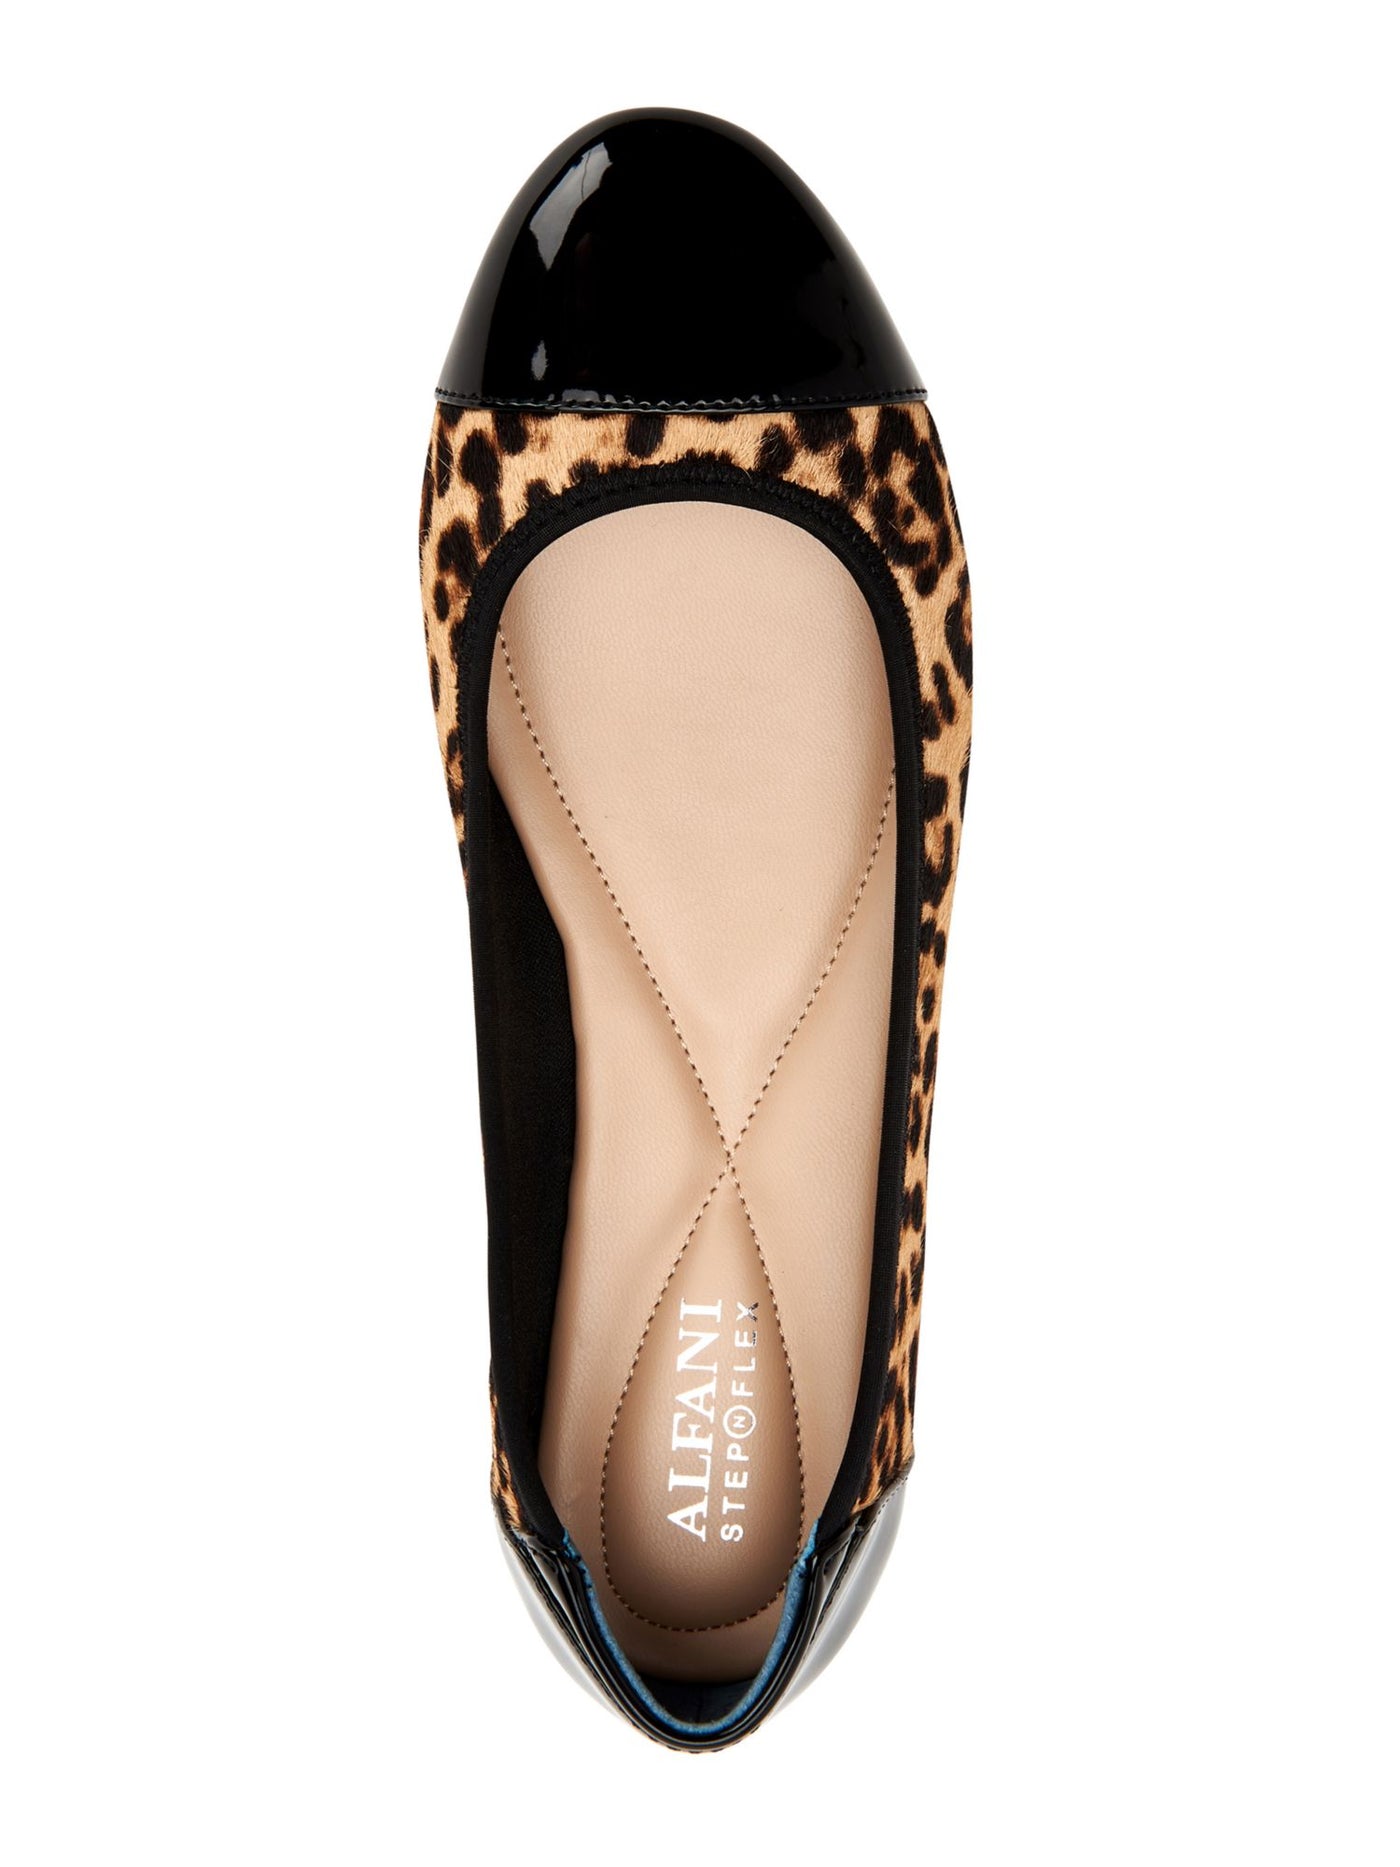 ALFANI Womens Brown Animal Print Breathable Padded Tavii Round Toe Slip On Leather Flats Shoes 7